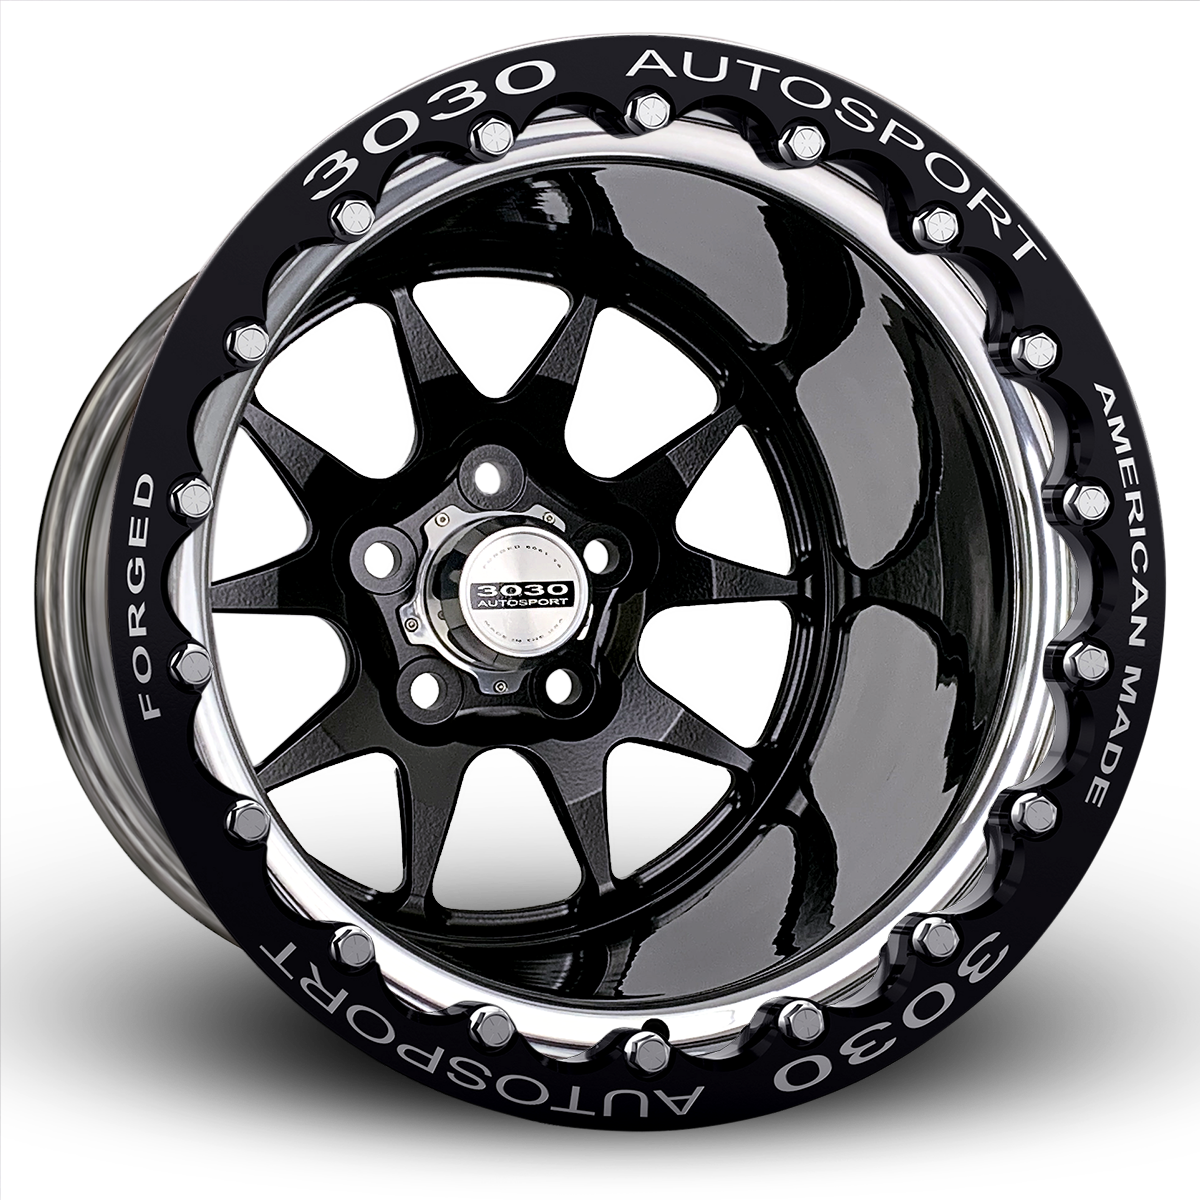 MACH-10 Double-Beadlock Wheel, Size: 15x12", Bolt Pattern: 5x4.5", Backspace: 5" [Black/Polished]